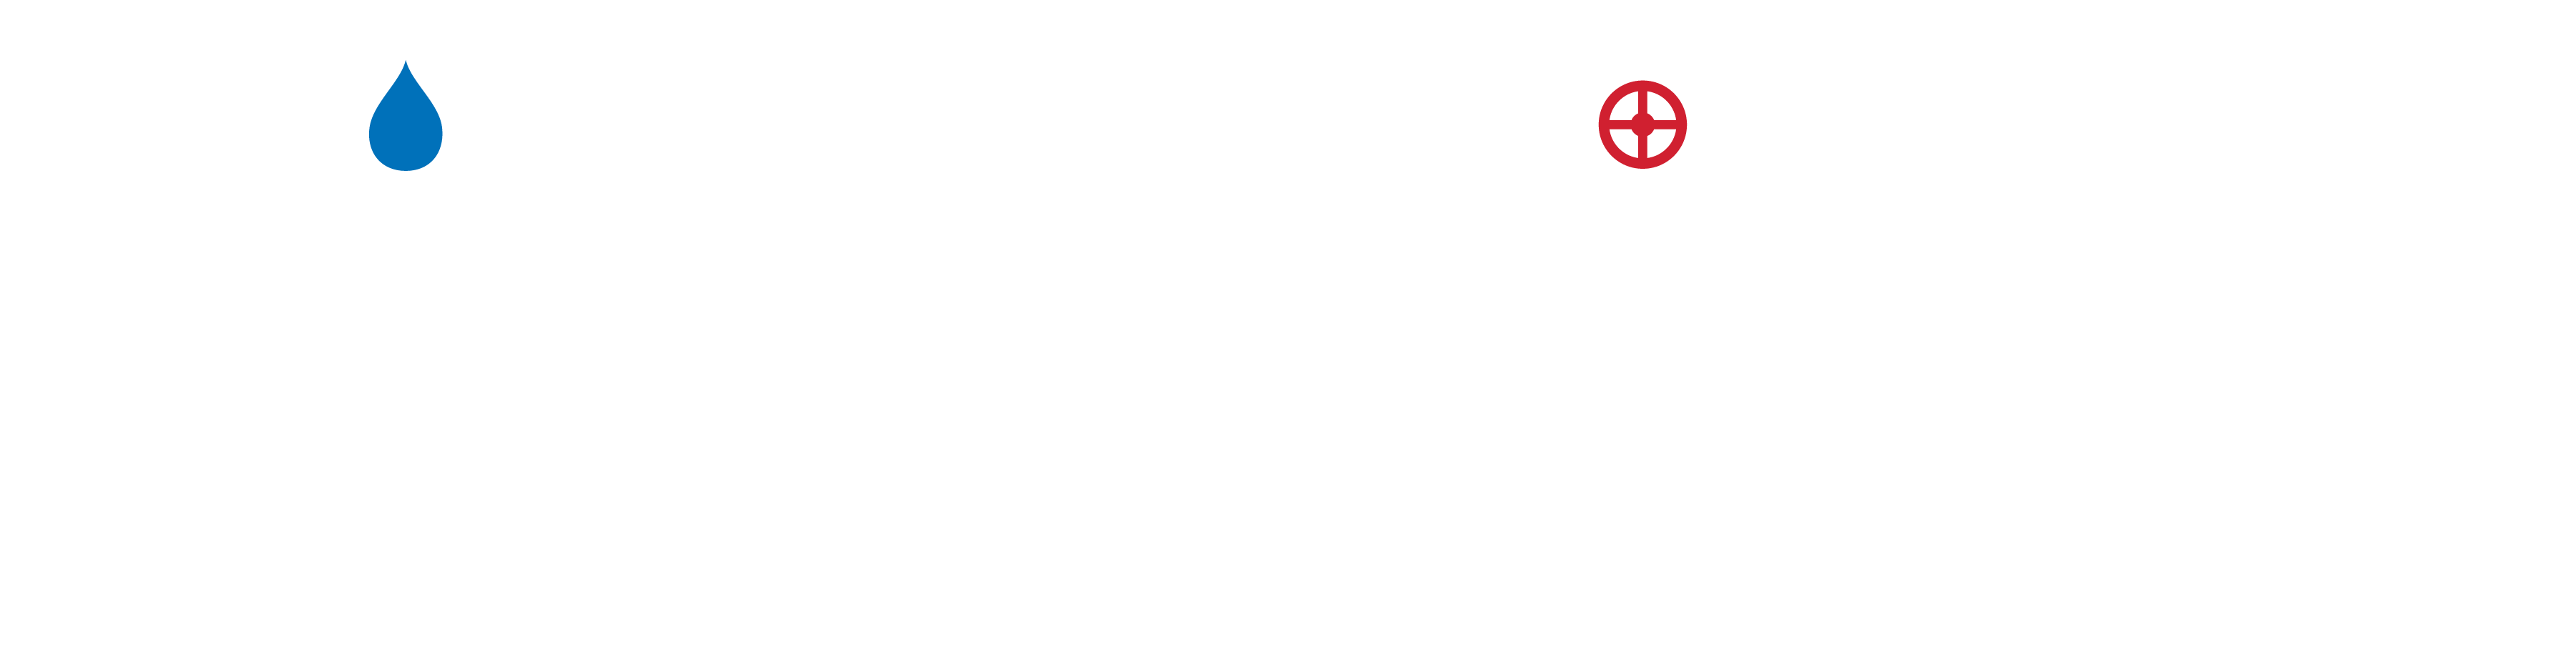 Zion Services, LLC